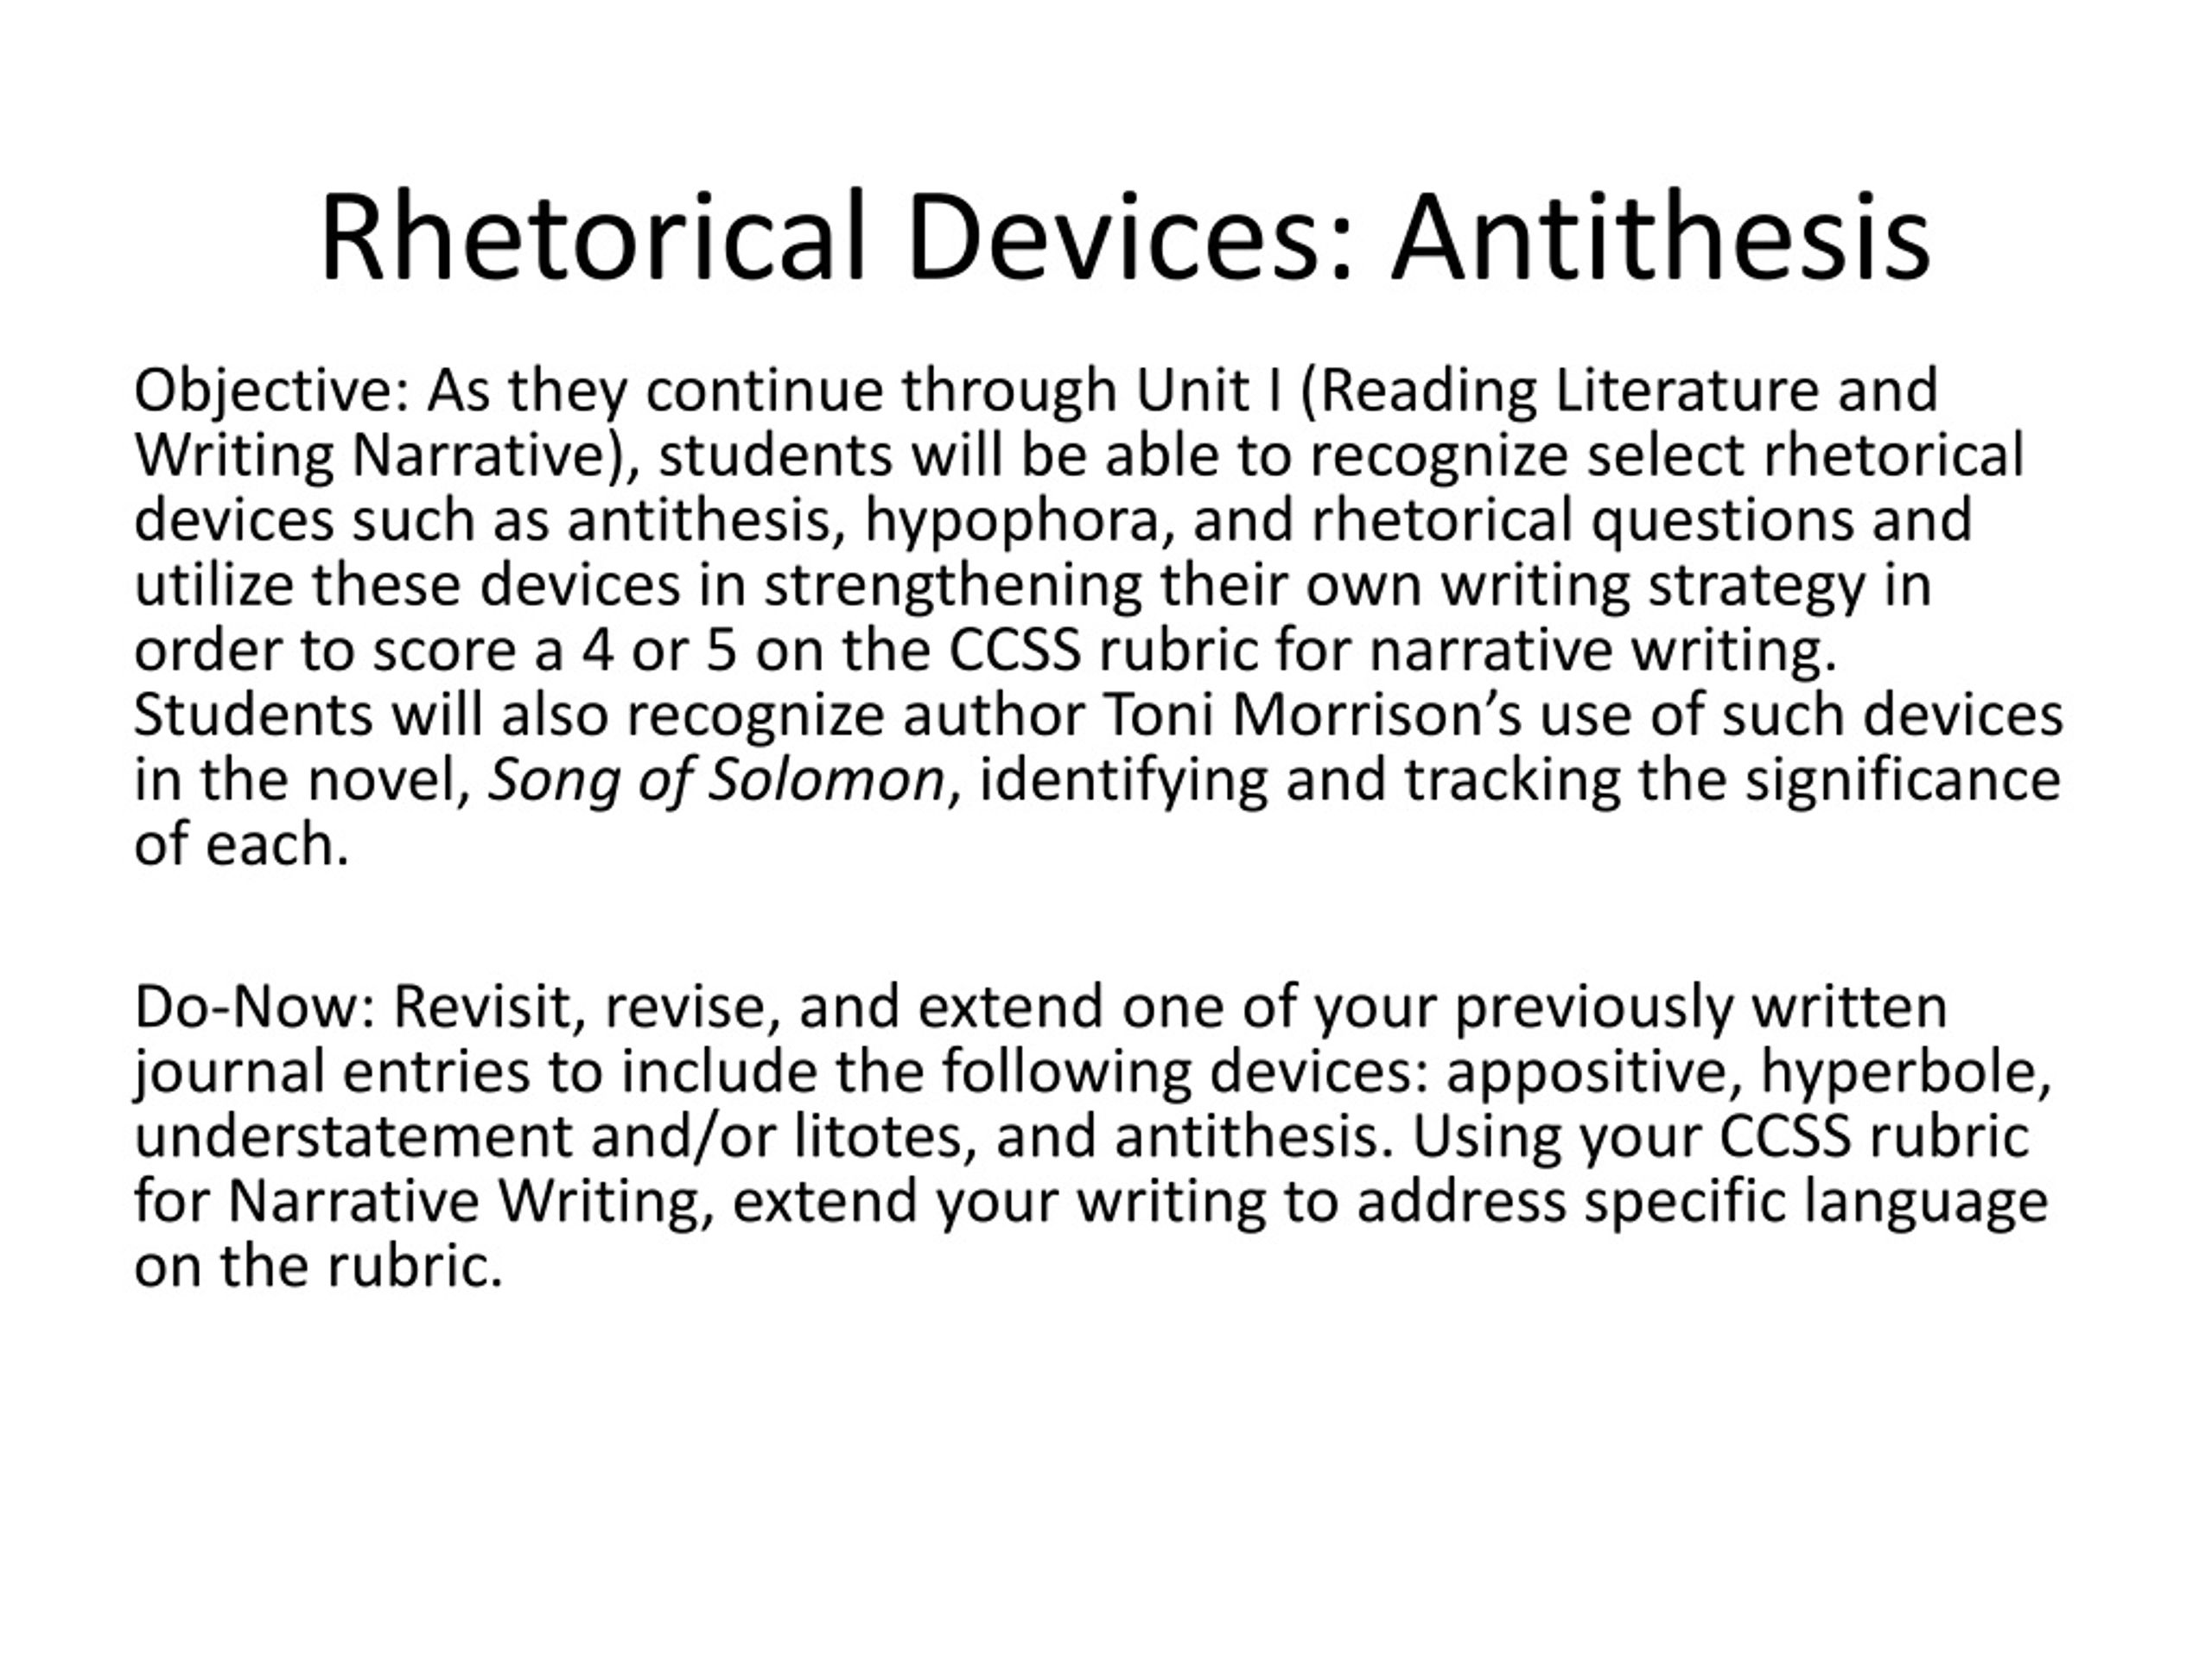 examples of antithesis rhetorical device